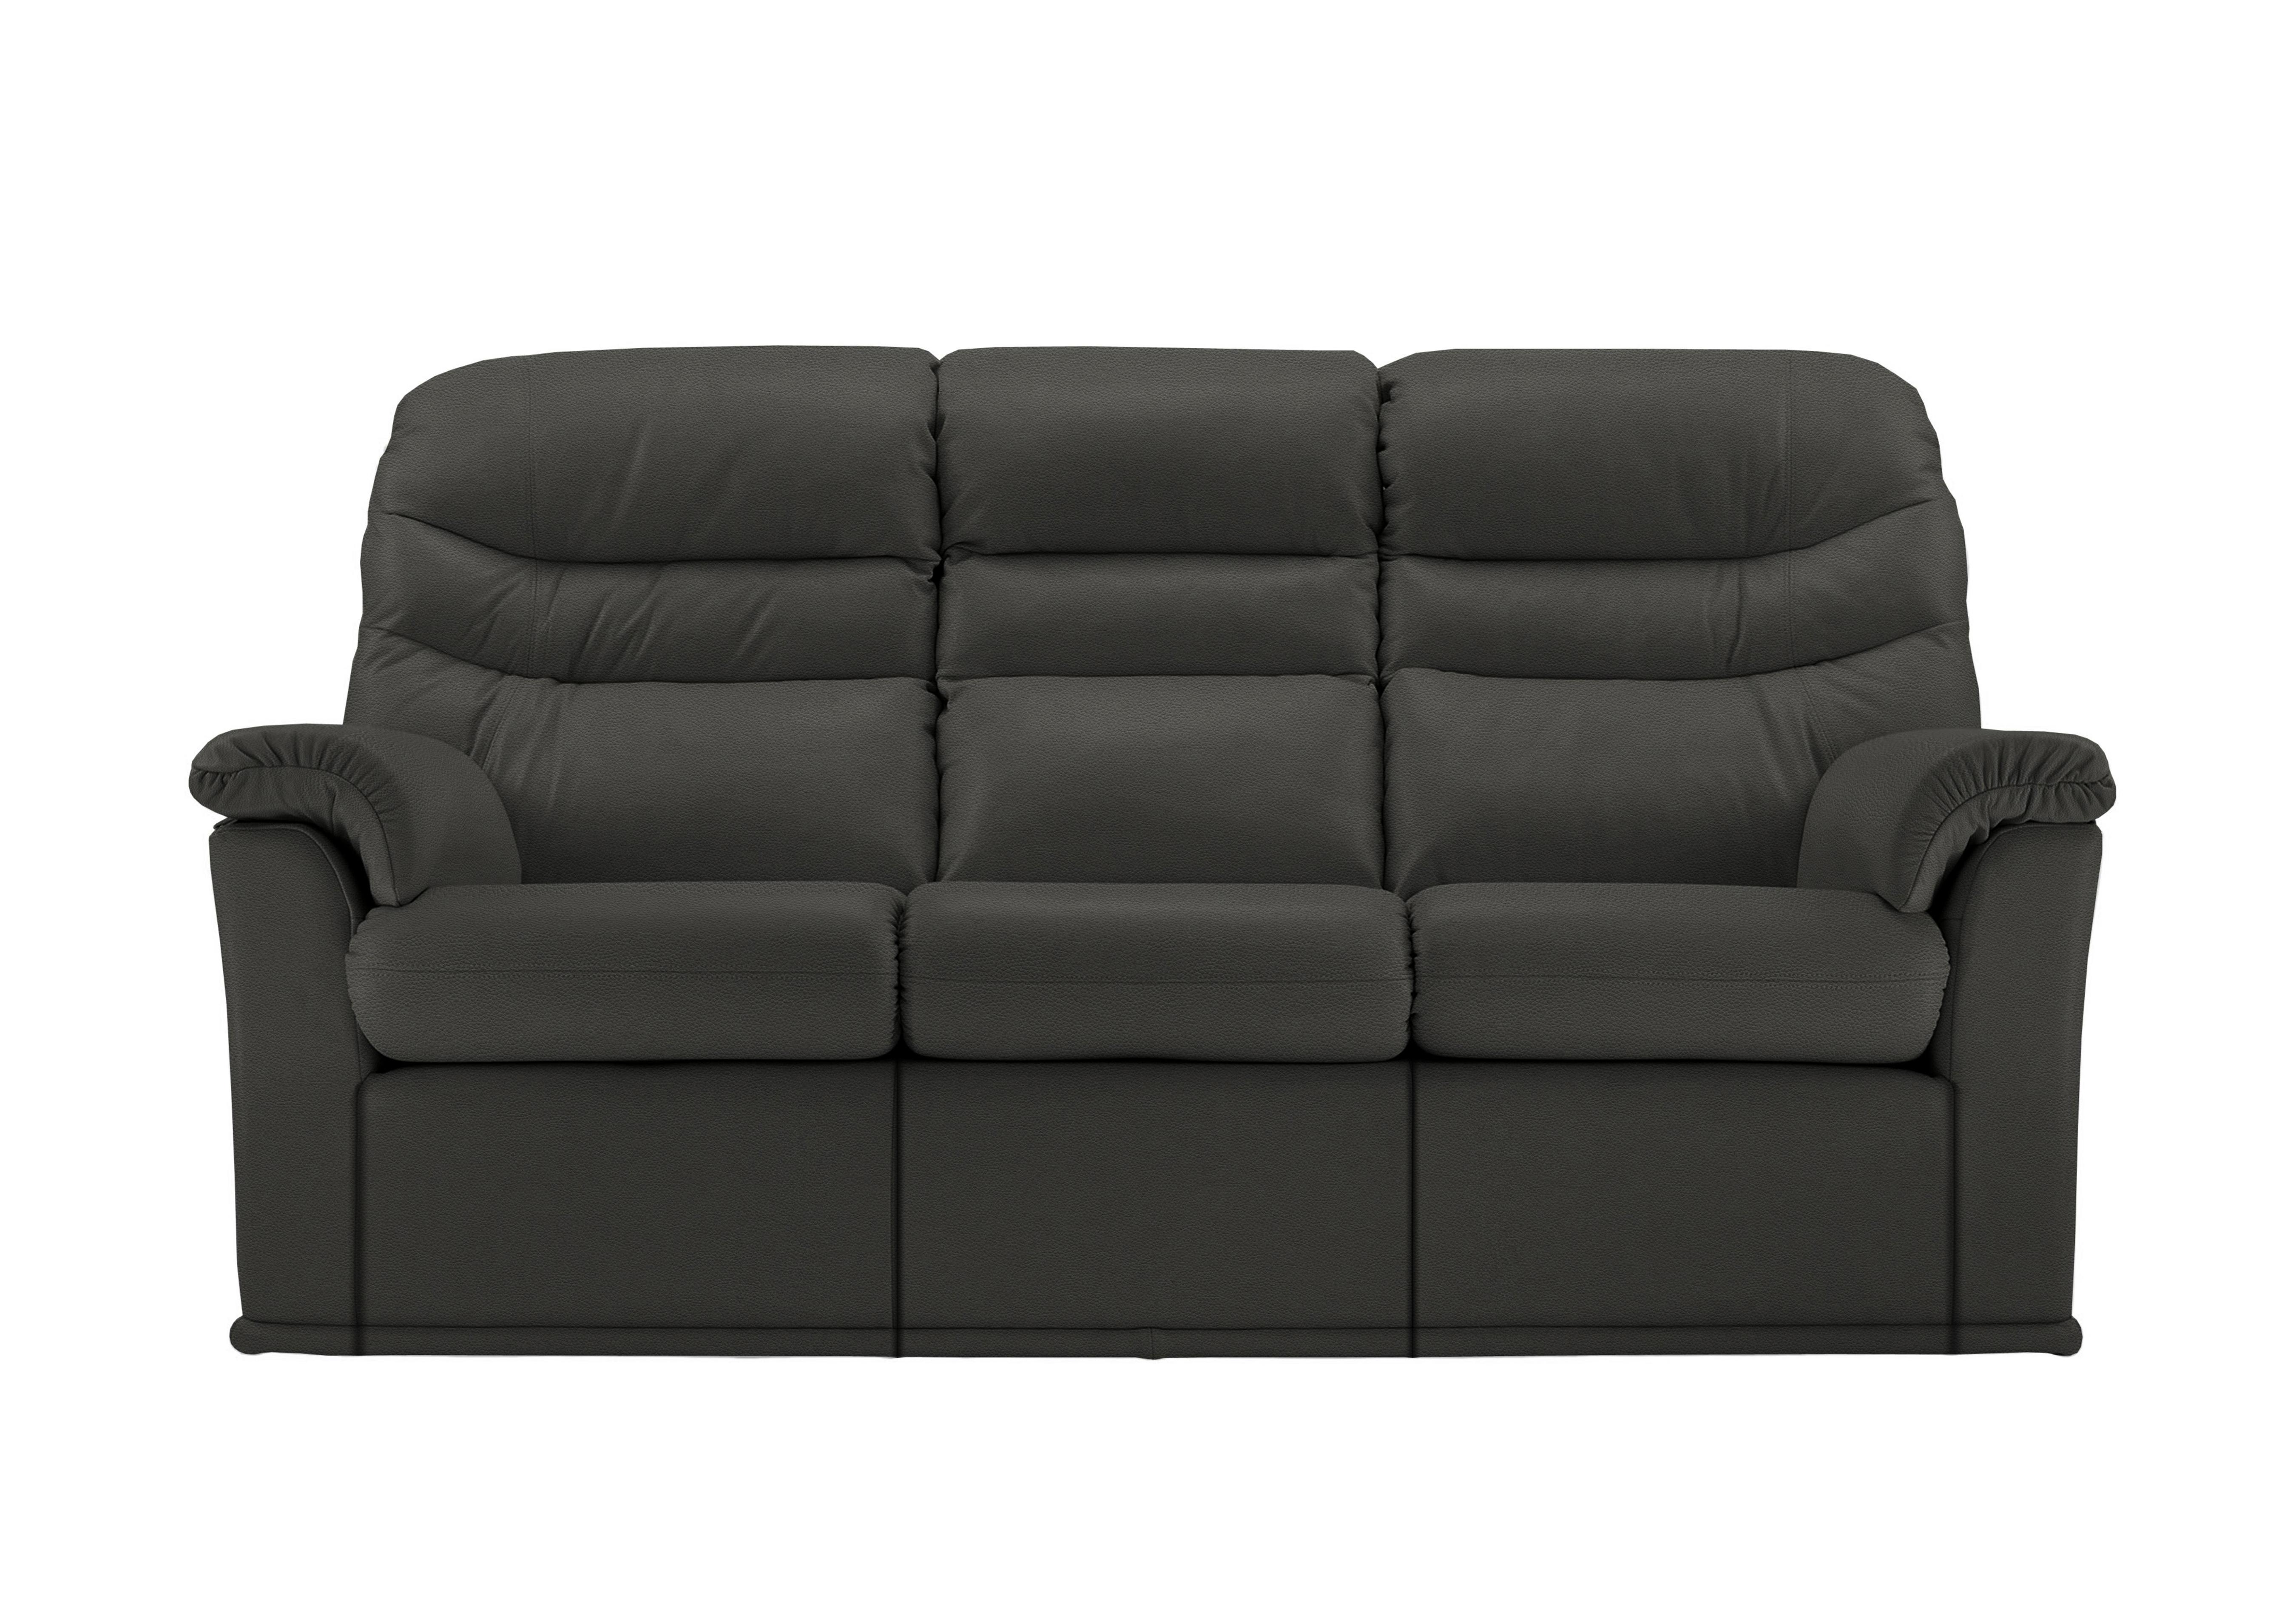 Malvern 3 Seater Leather Sofa in H004 Oxford Black on Furniture Village